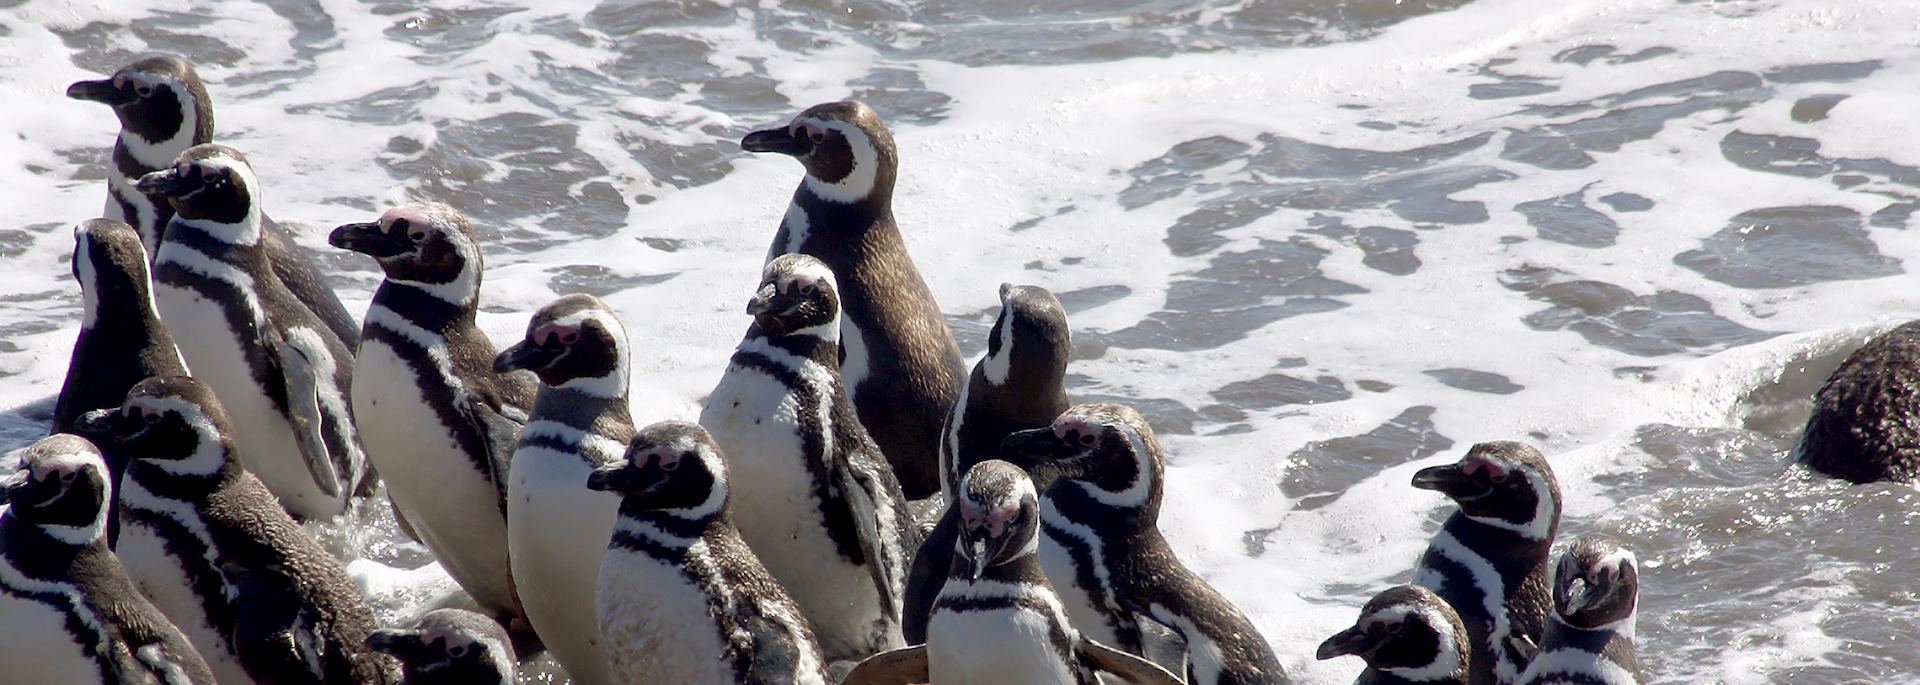 Magellanic penguins, Península Valdés, Argentina